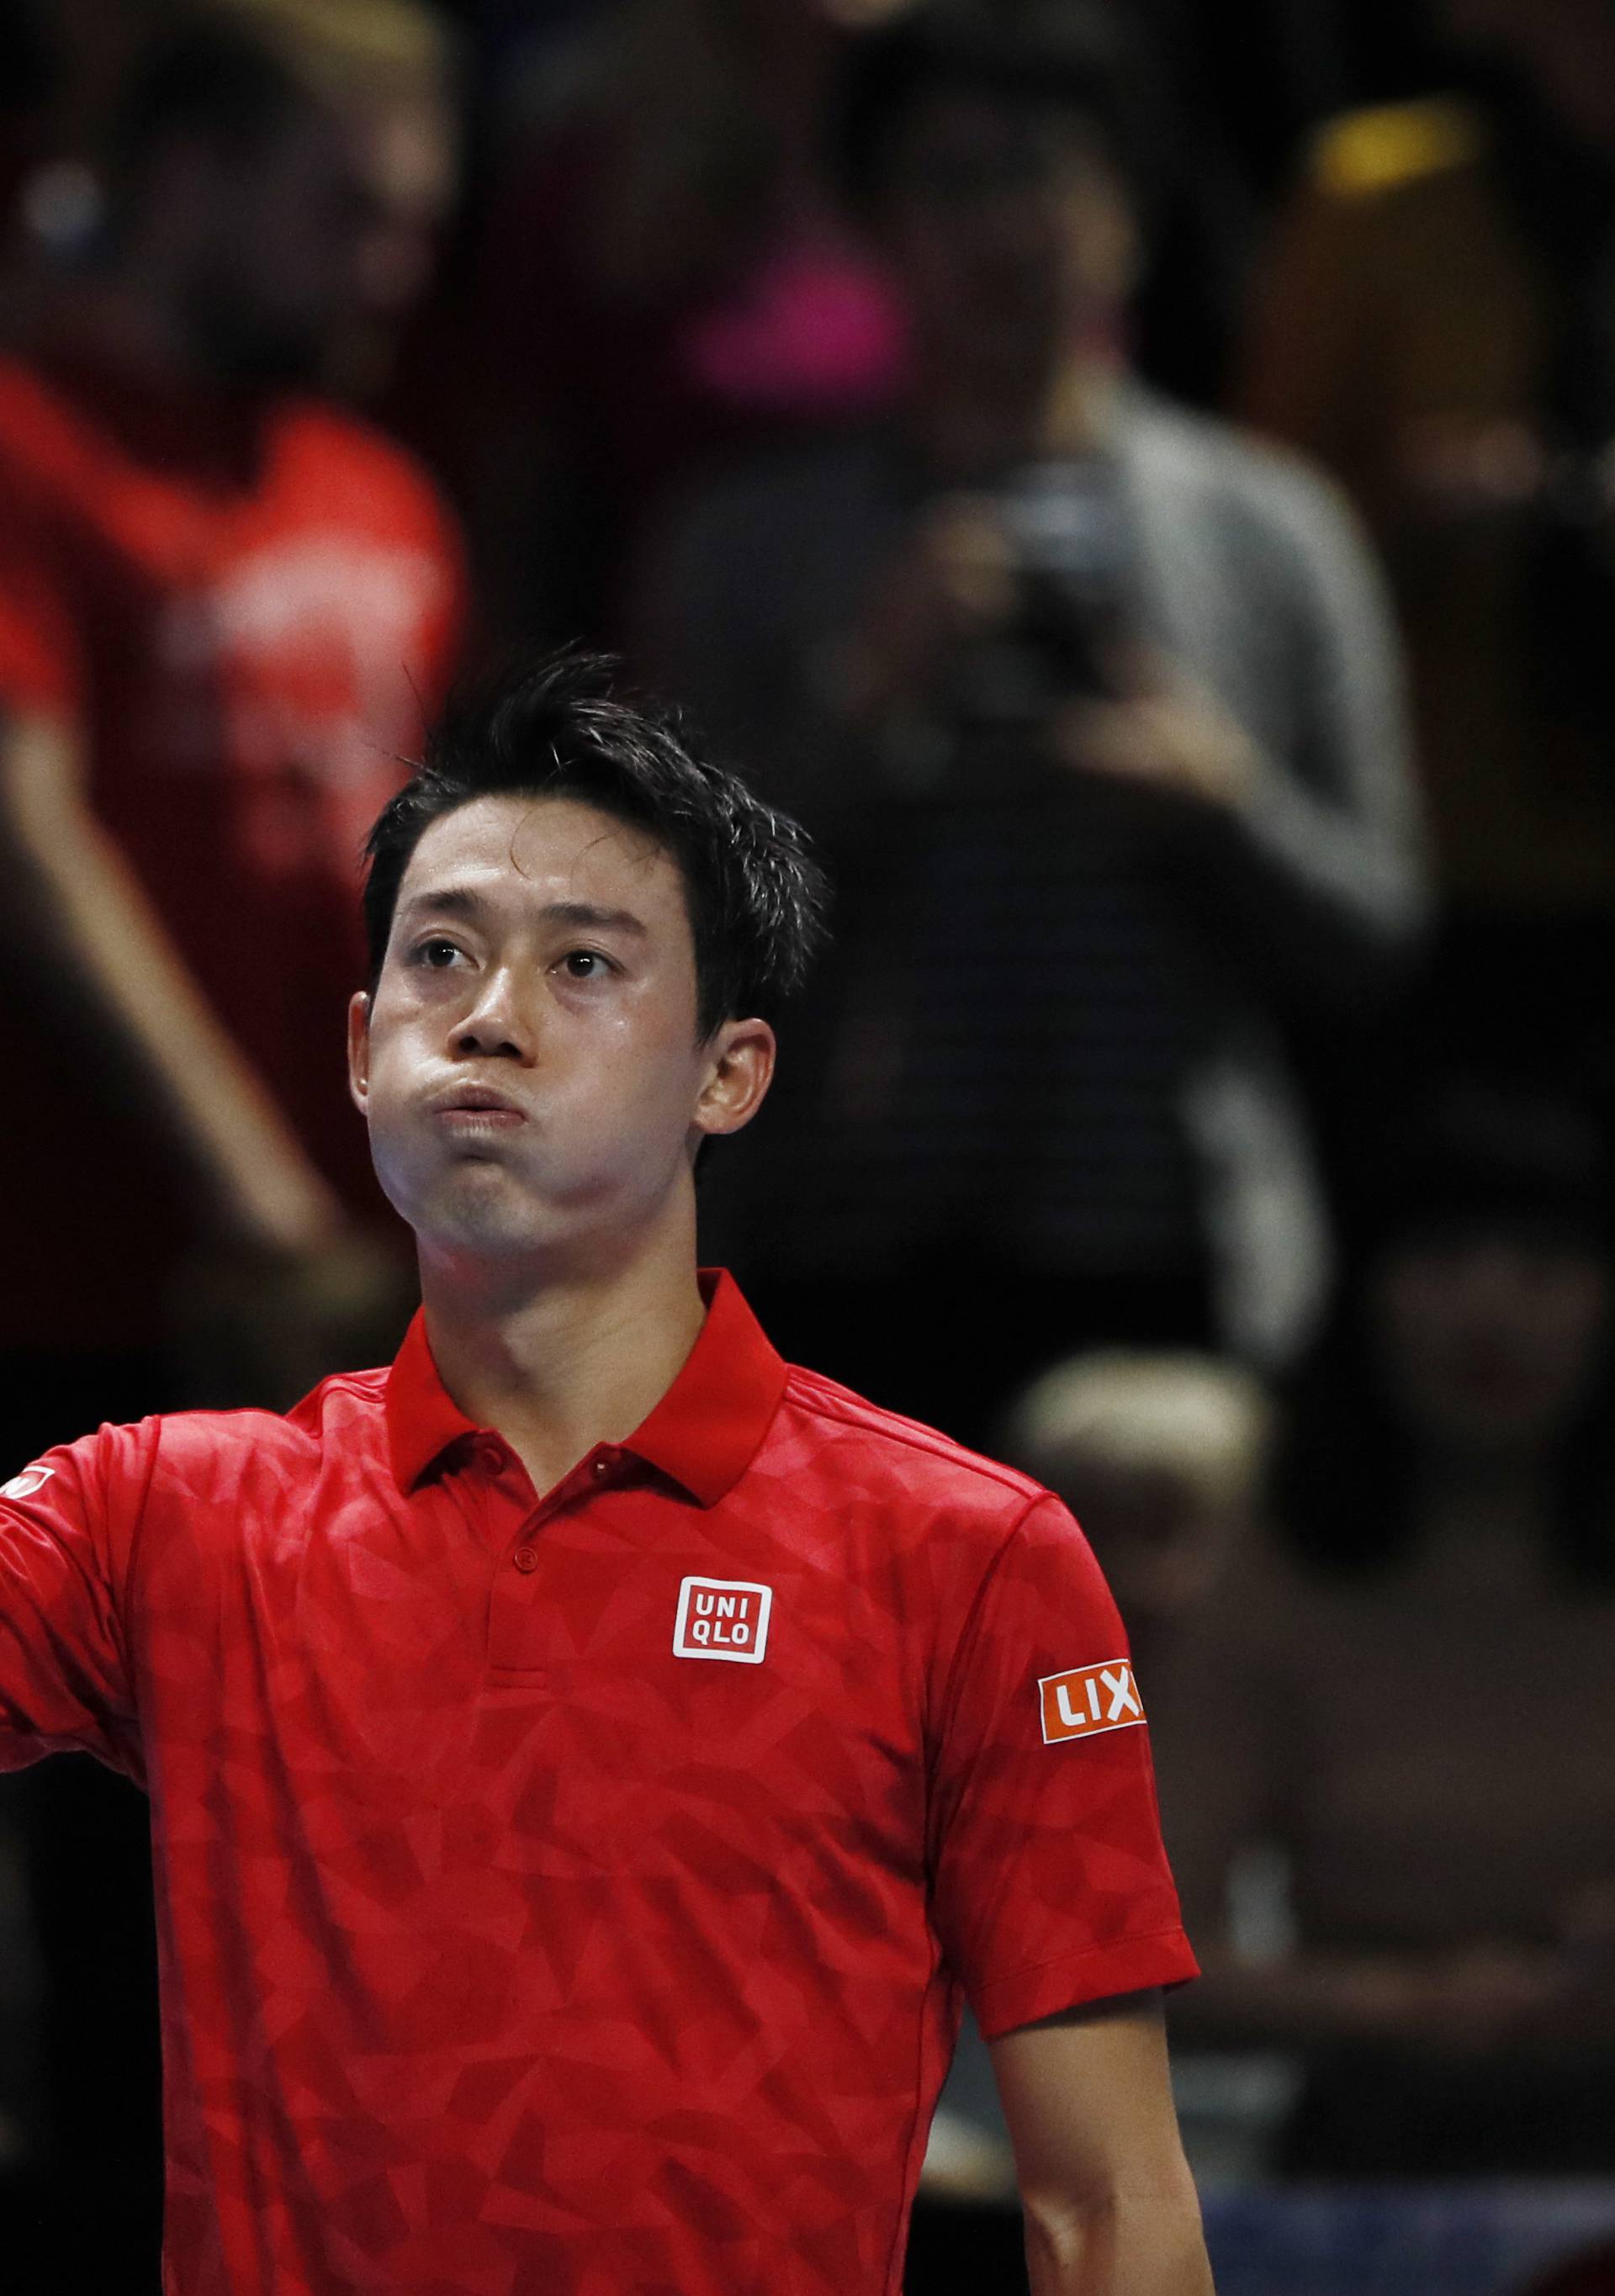 Japan's Kei Nishikori celebrates after winning his round robin match against Switzerland's Stanislas Wawrinka